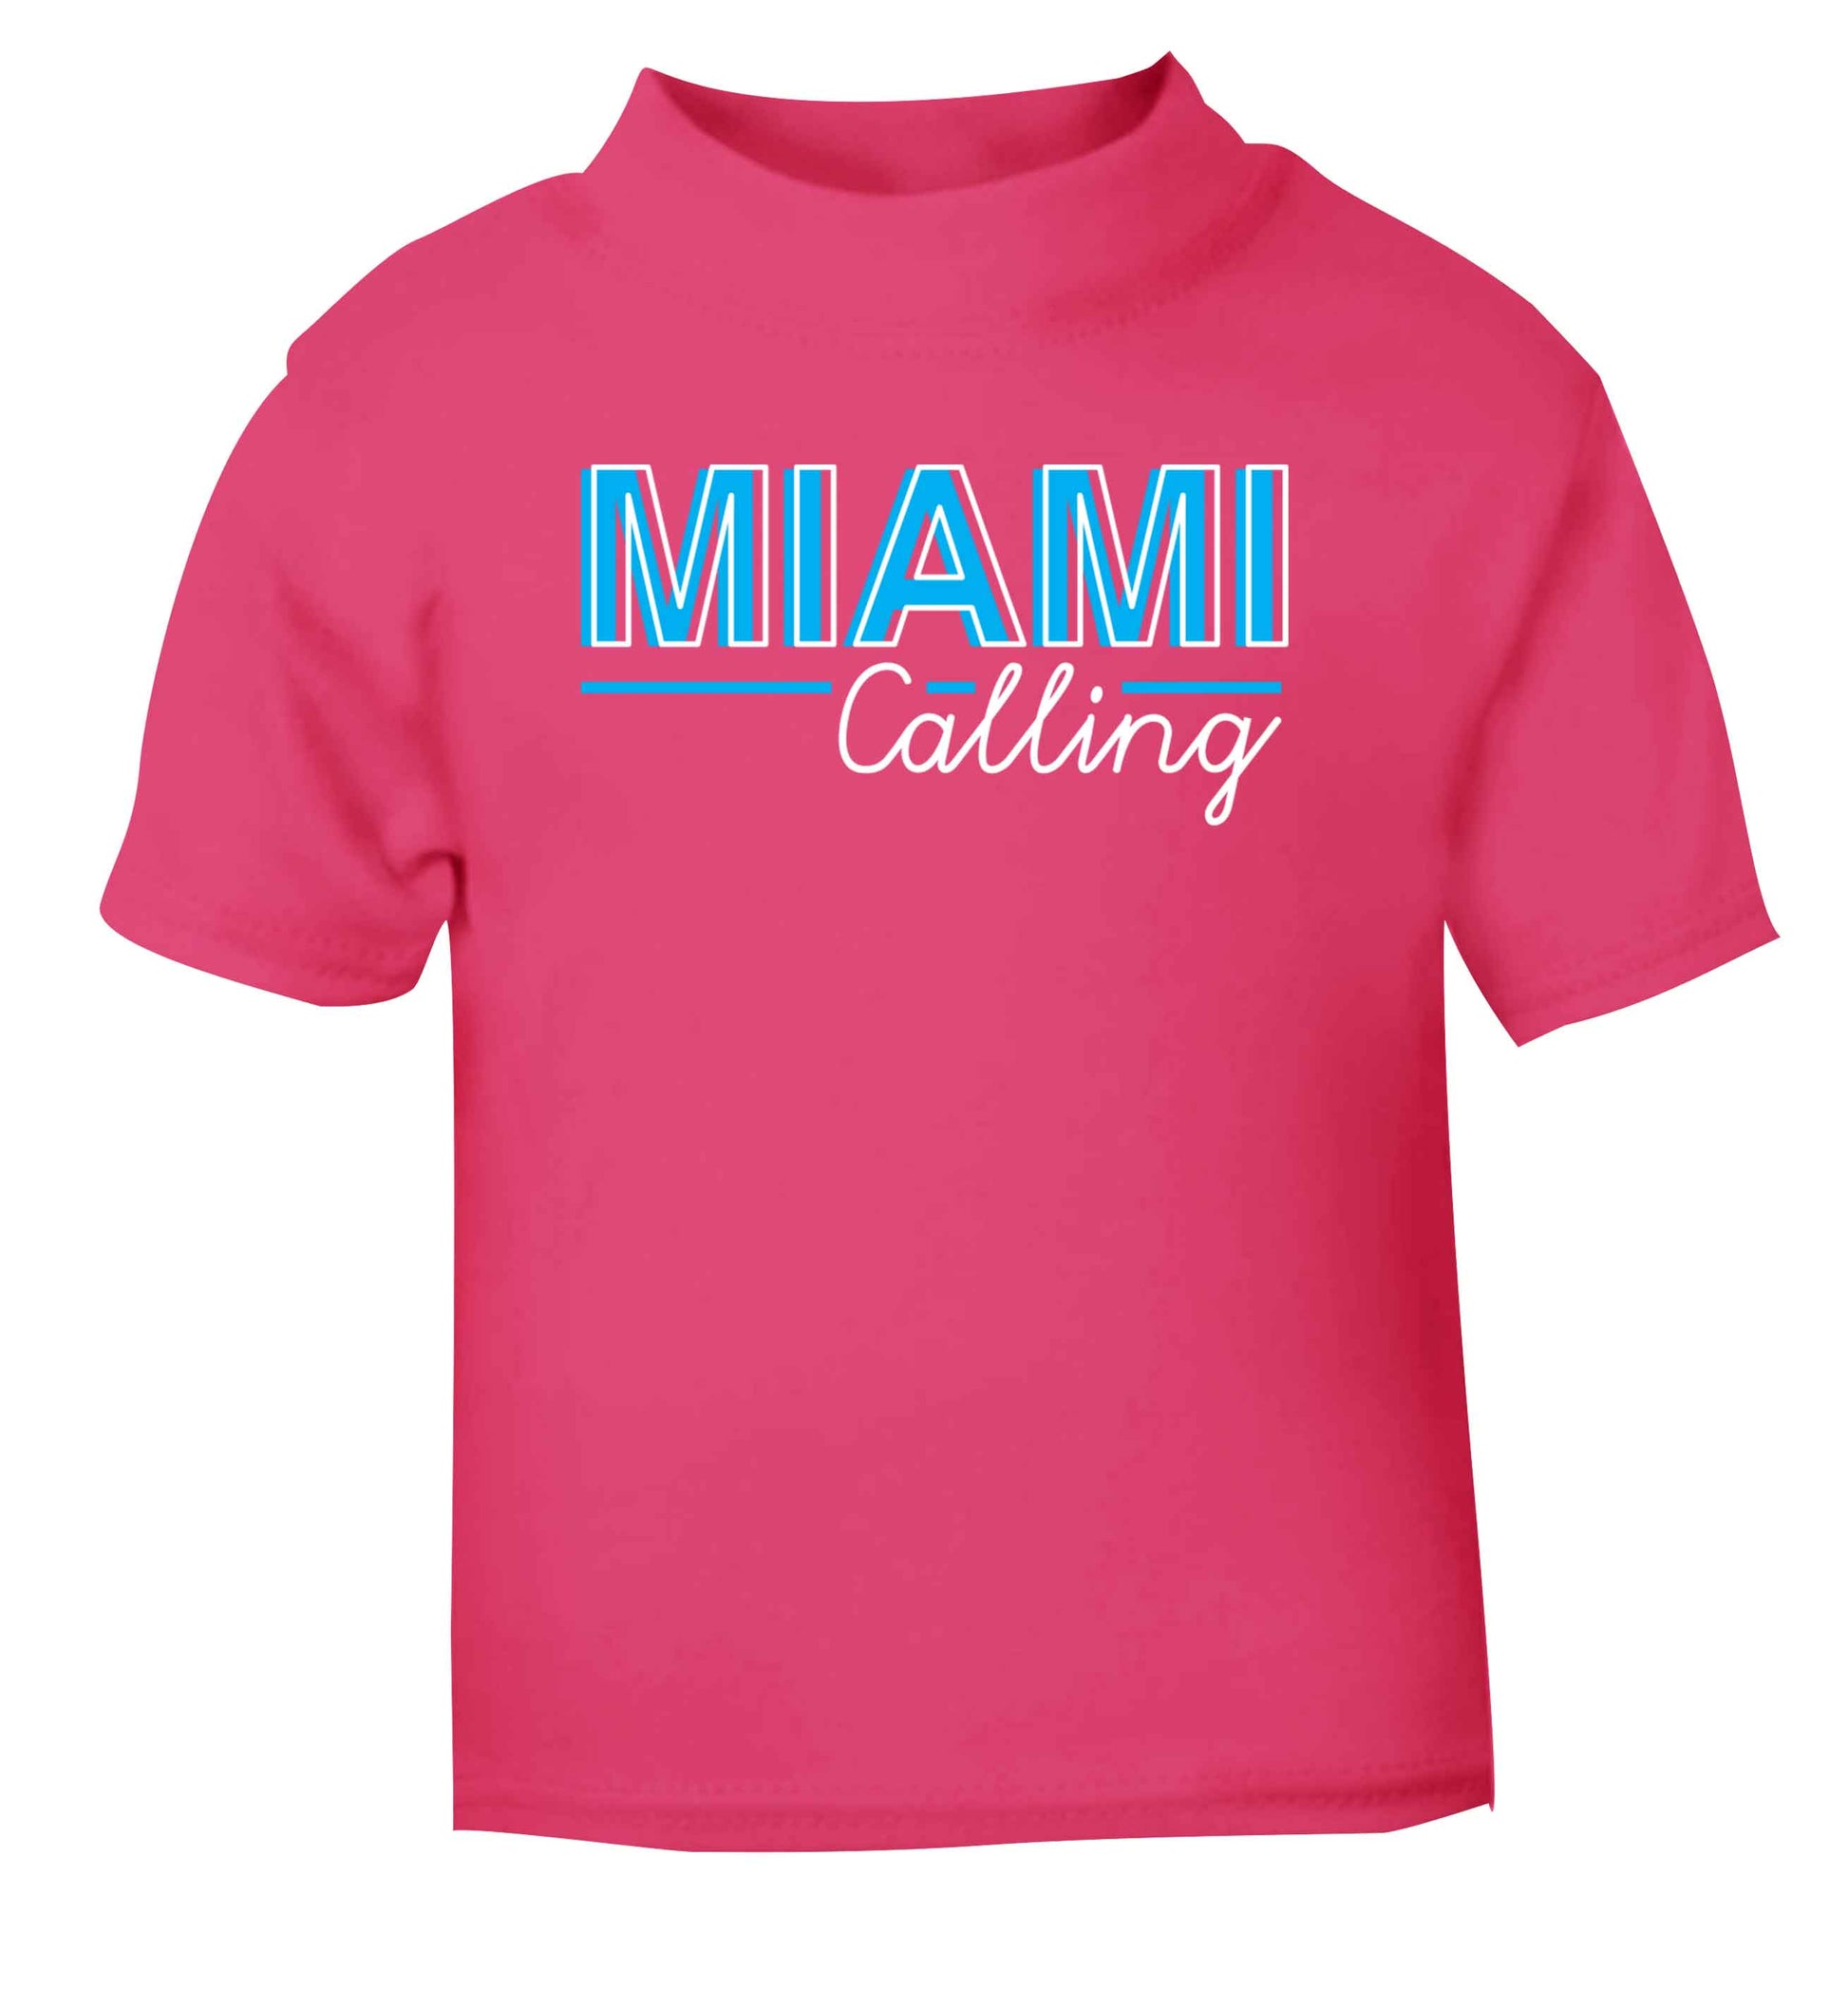 Miami calling pink Baby Toddler Tshirt 2 Years